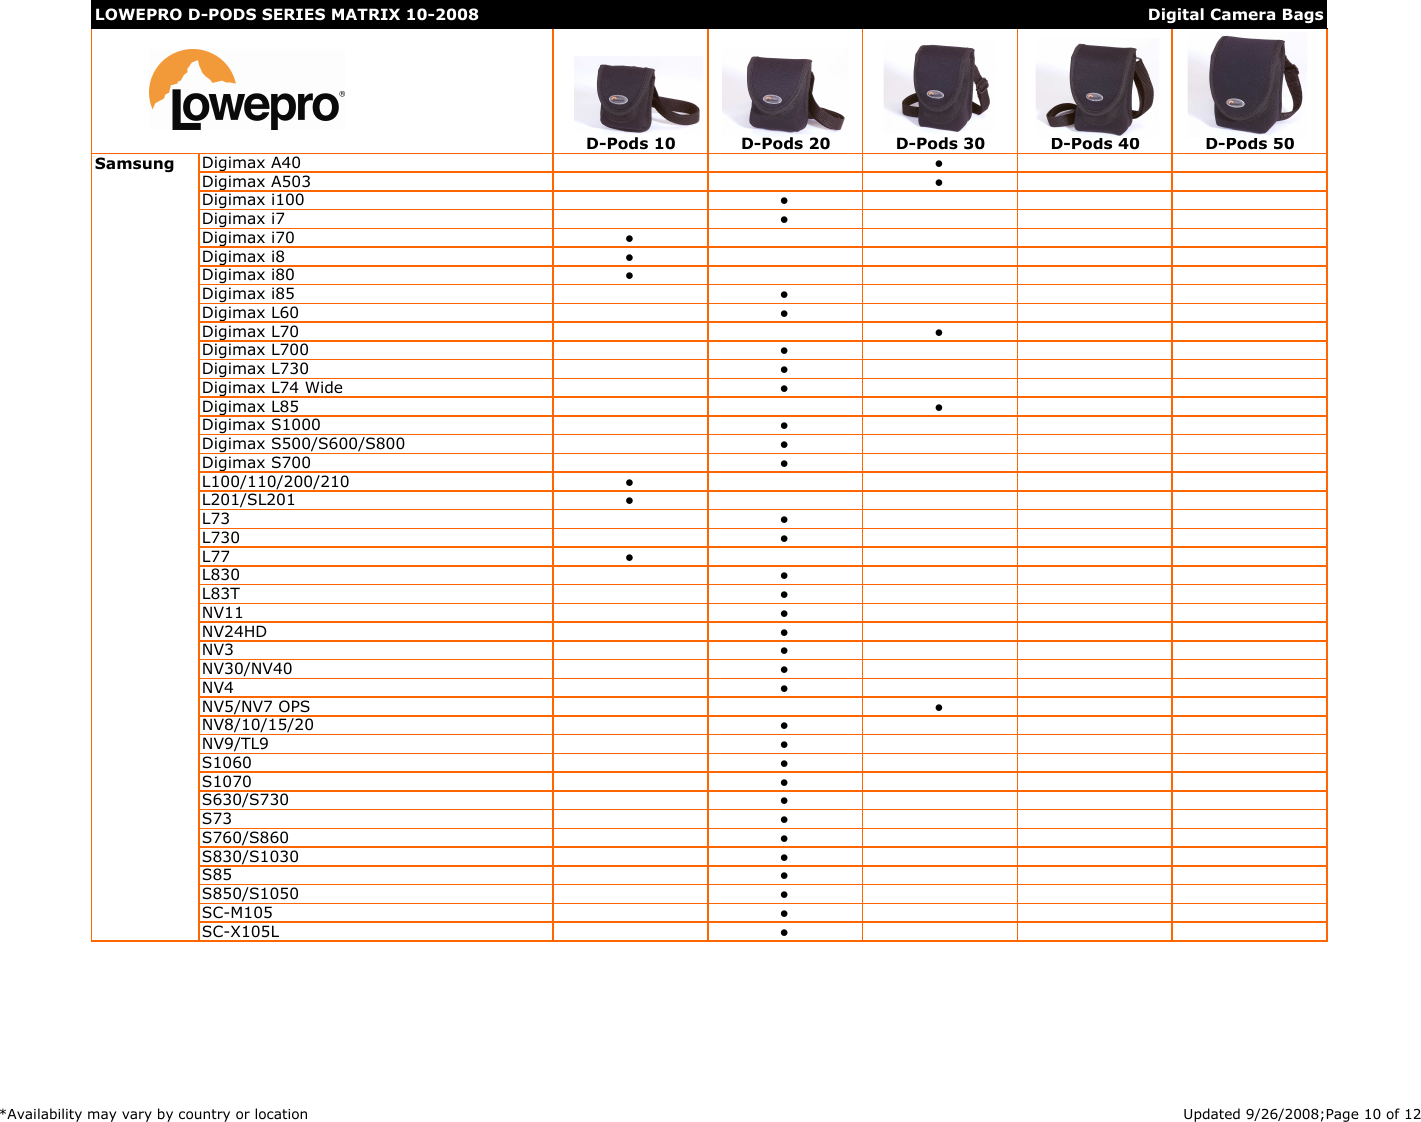 Lowepro C840 Users Manual D Pods_Matrix 10 08